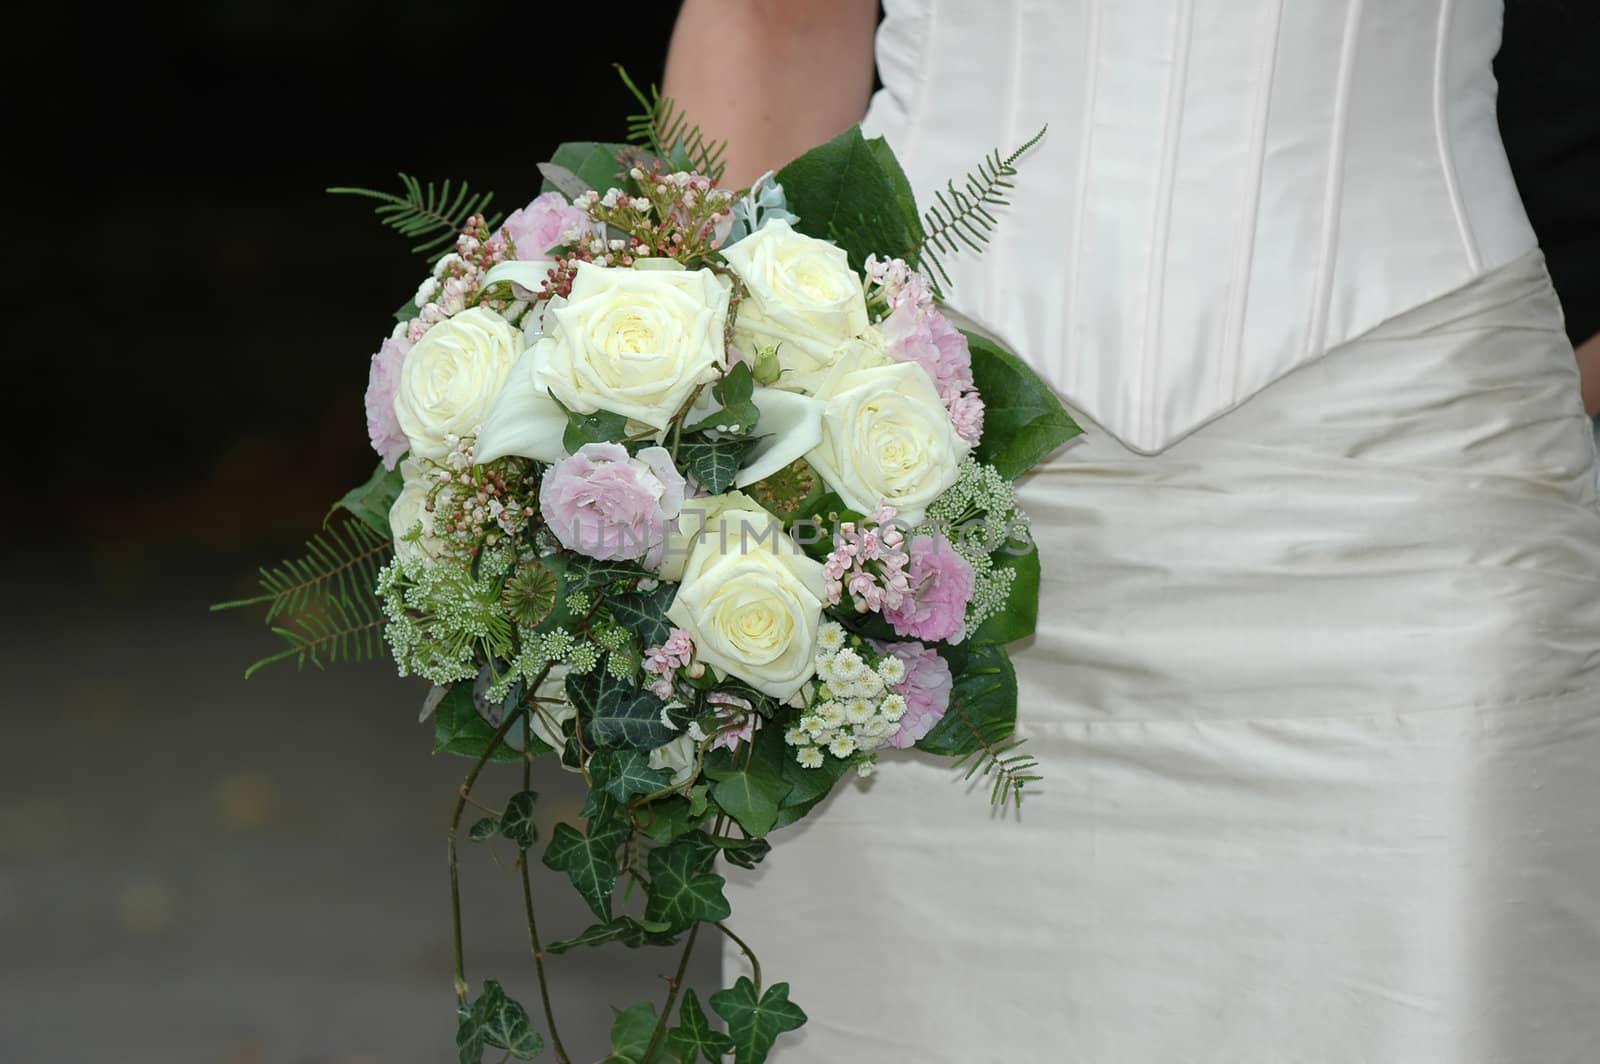 Bride is holding her wedding bouquet.